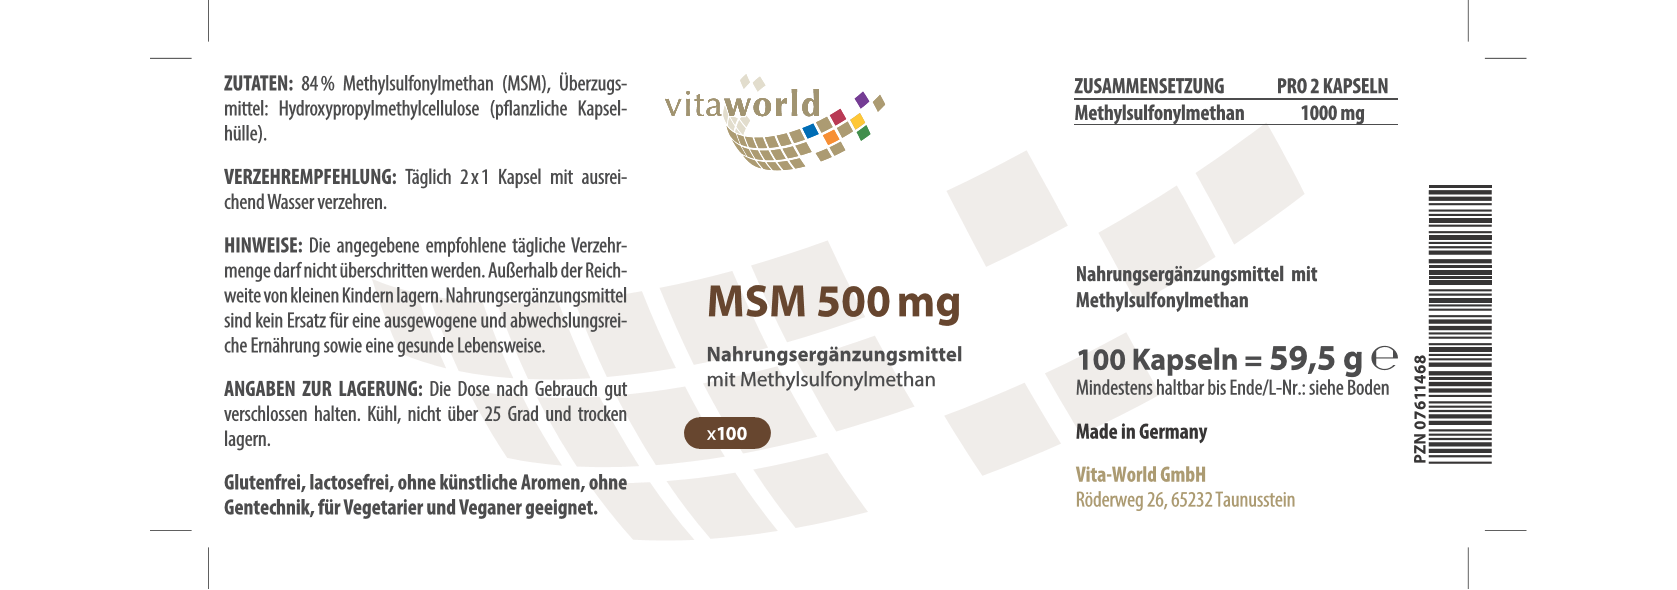 MSM 500 mg (100 Kps)